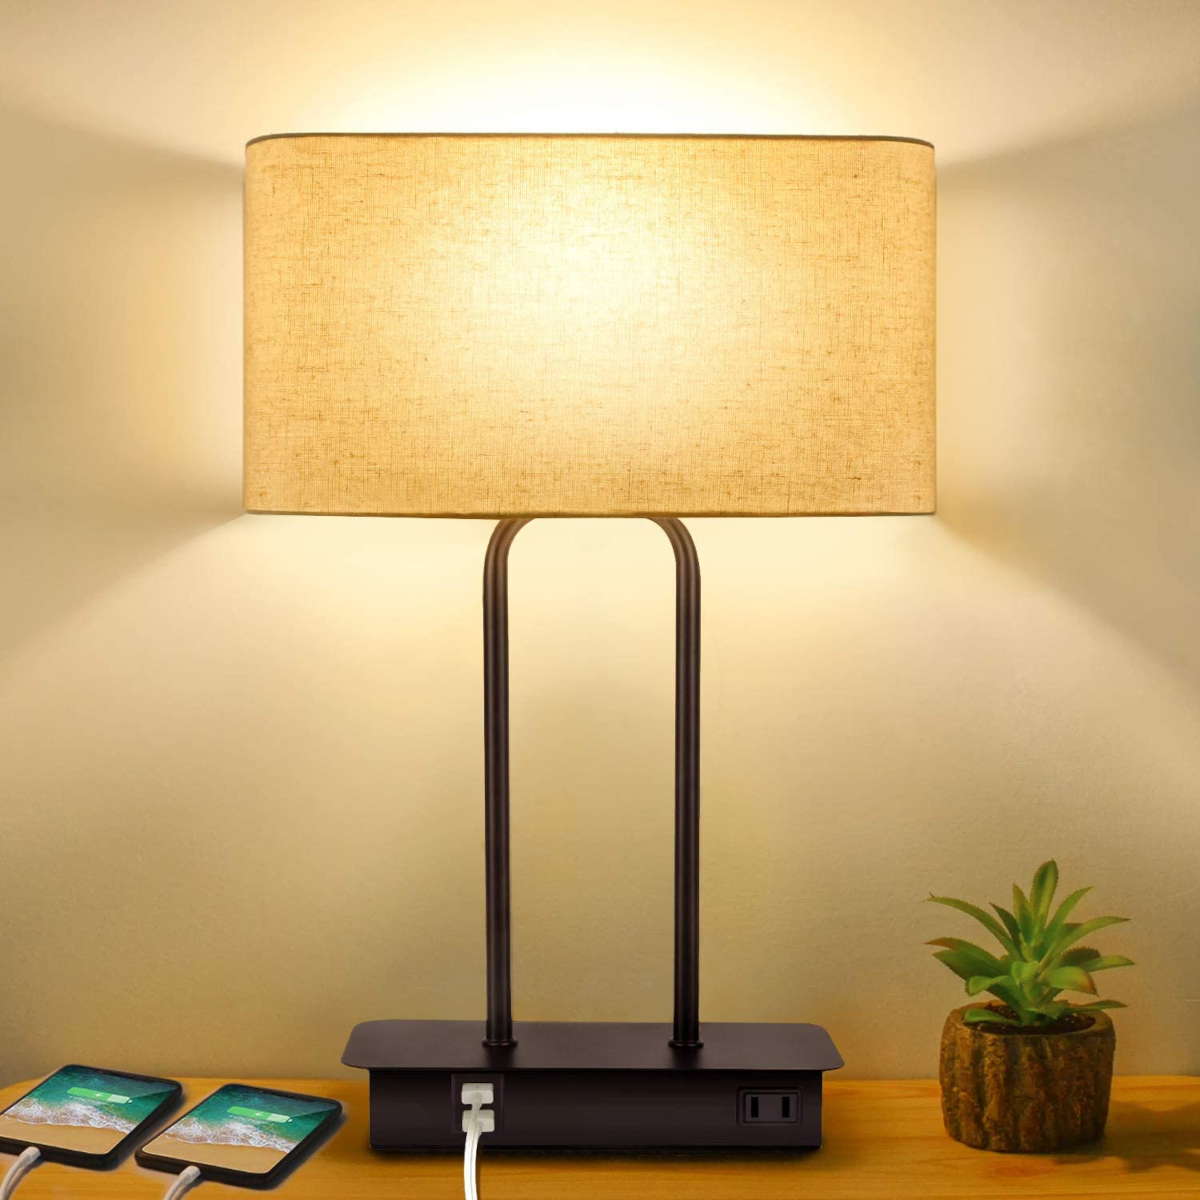 BesLowe minimalistic bedside table lamp lit up on a shelf